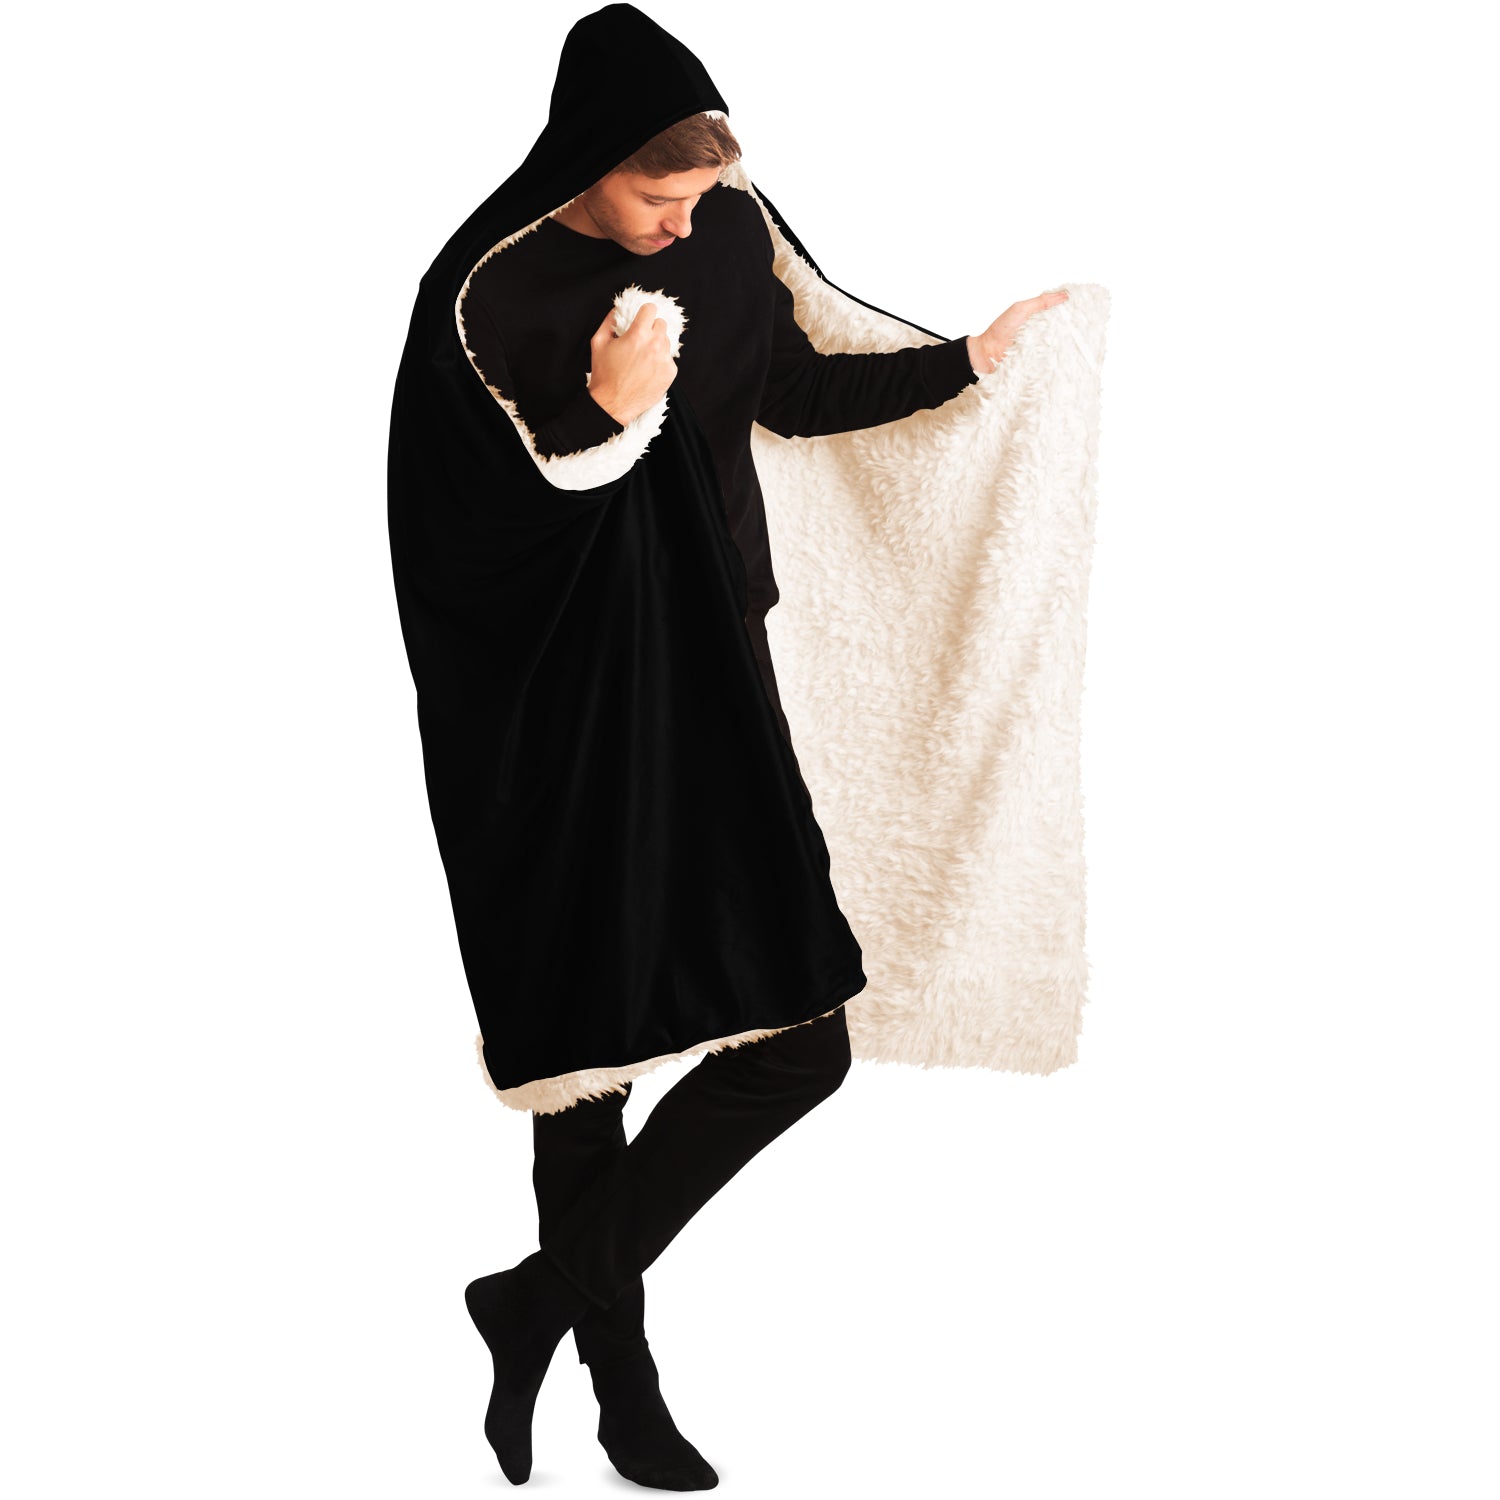 SADA Hooded Blanket - Black